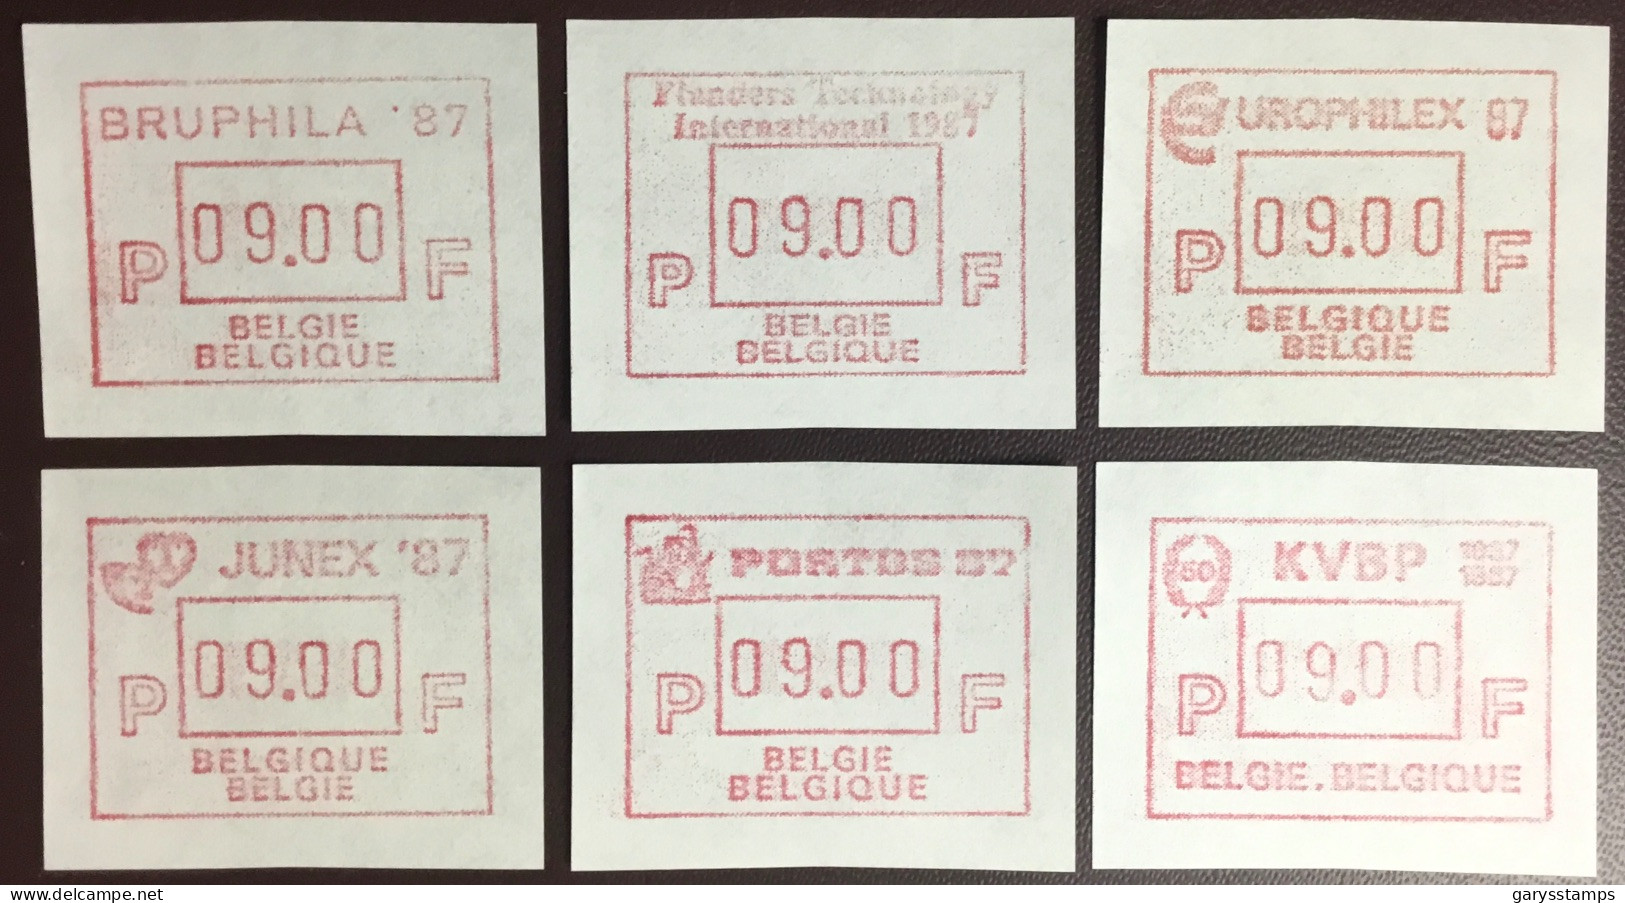 Belgium 1987 ATM Machine Stamps MNH - Neufs